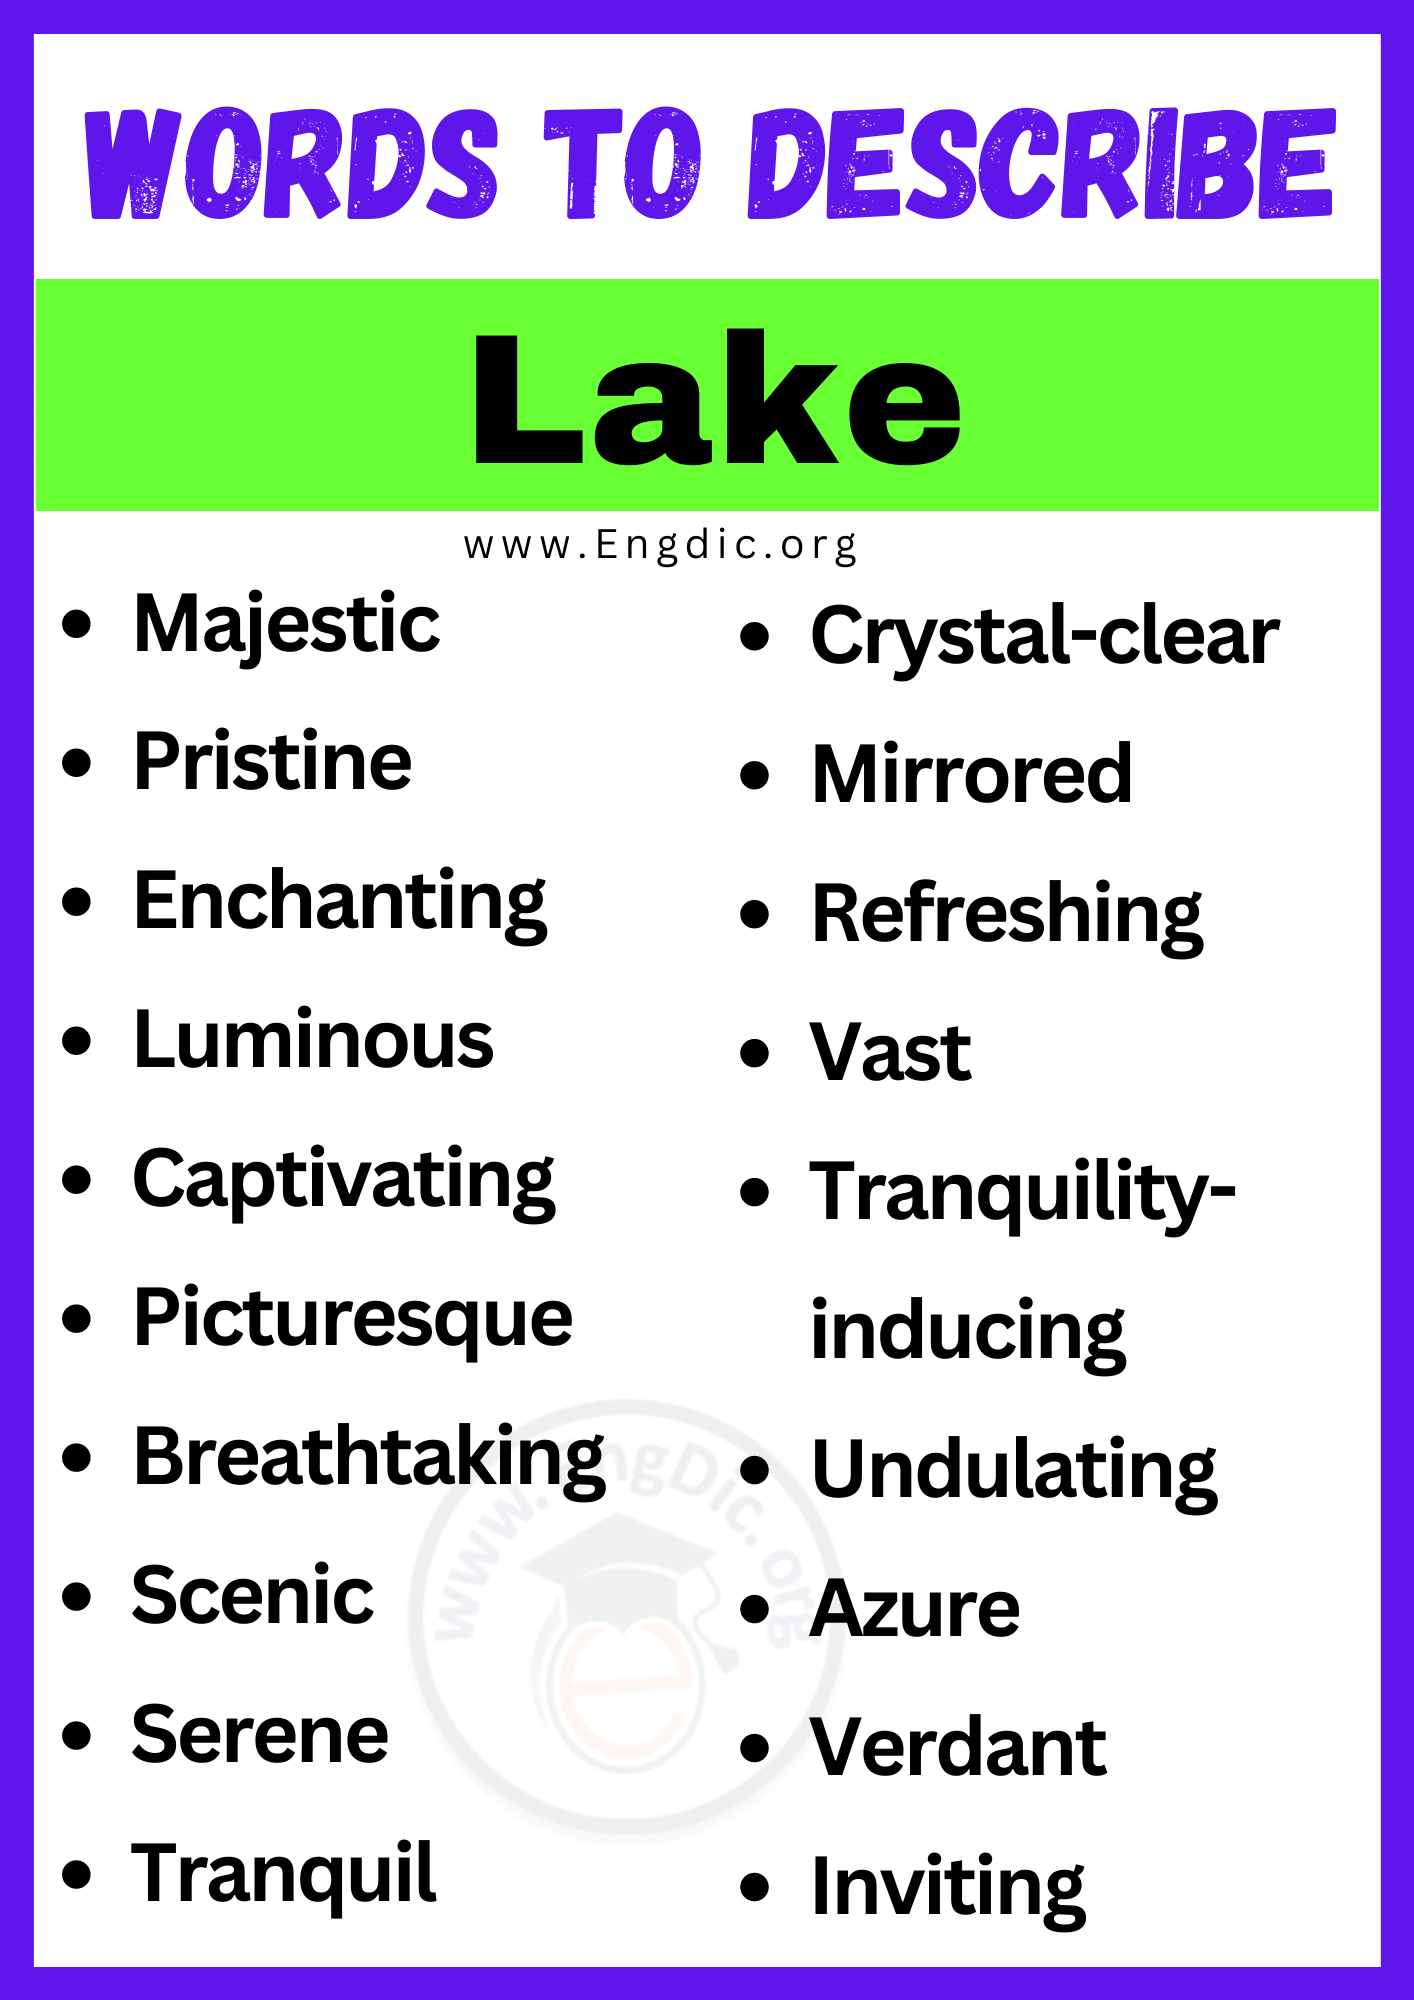 Words to Describe Lake